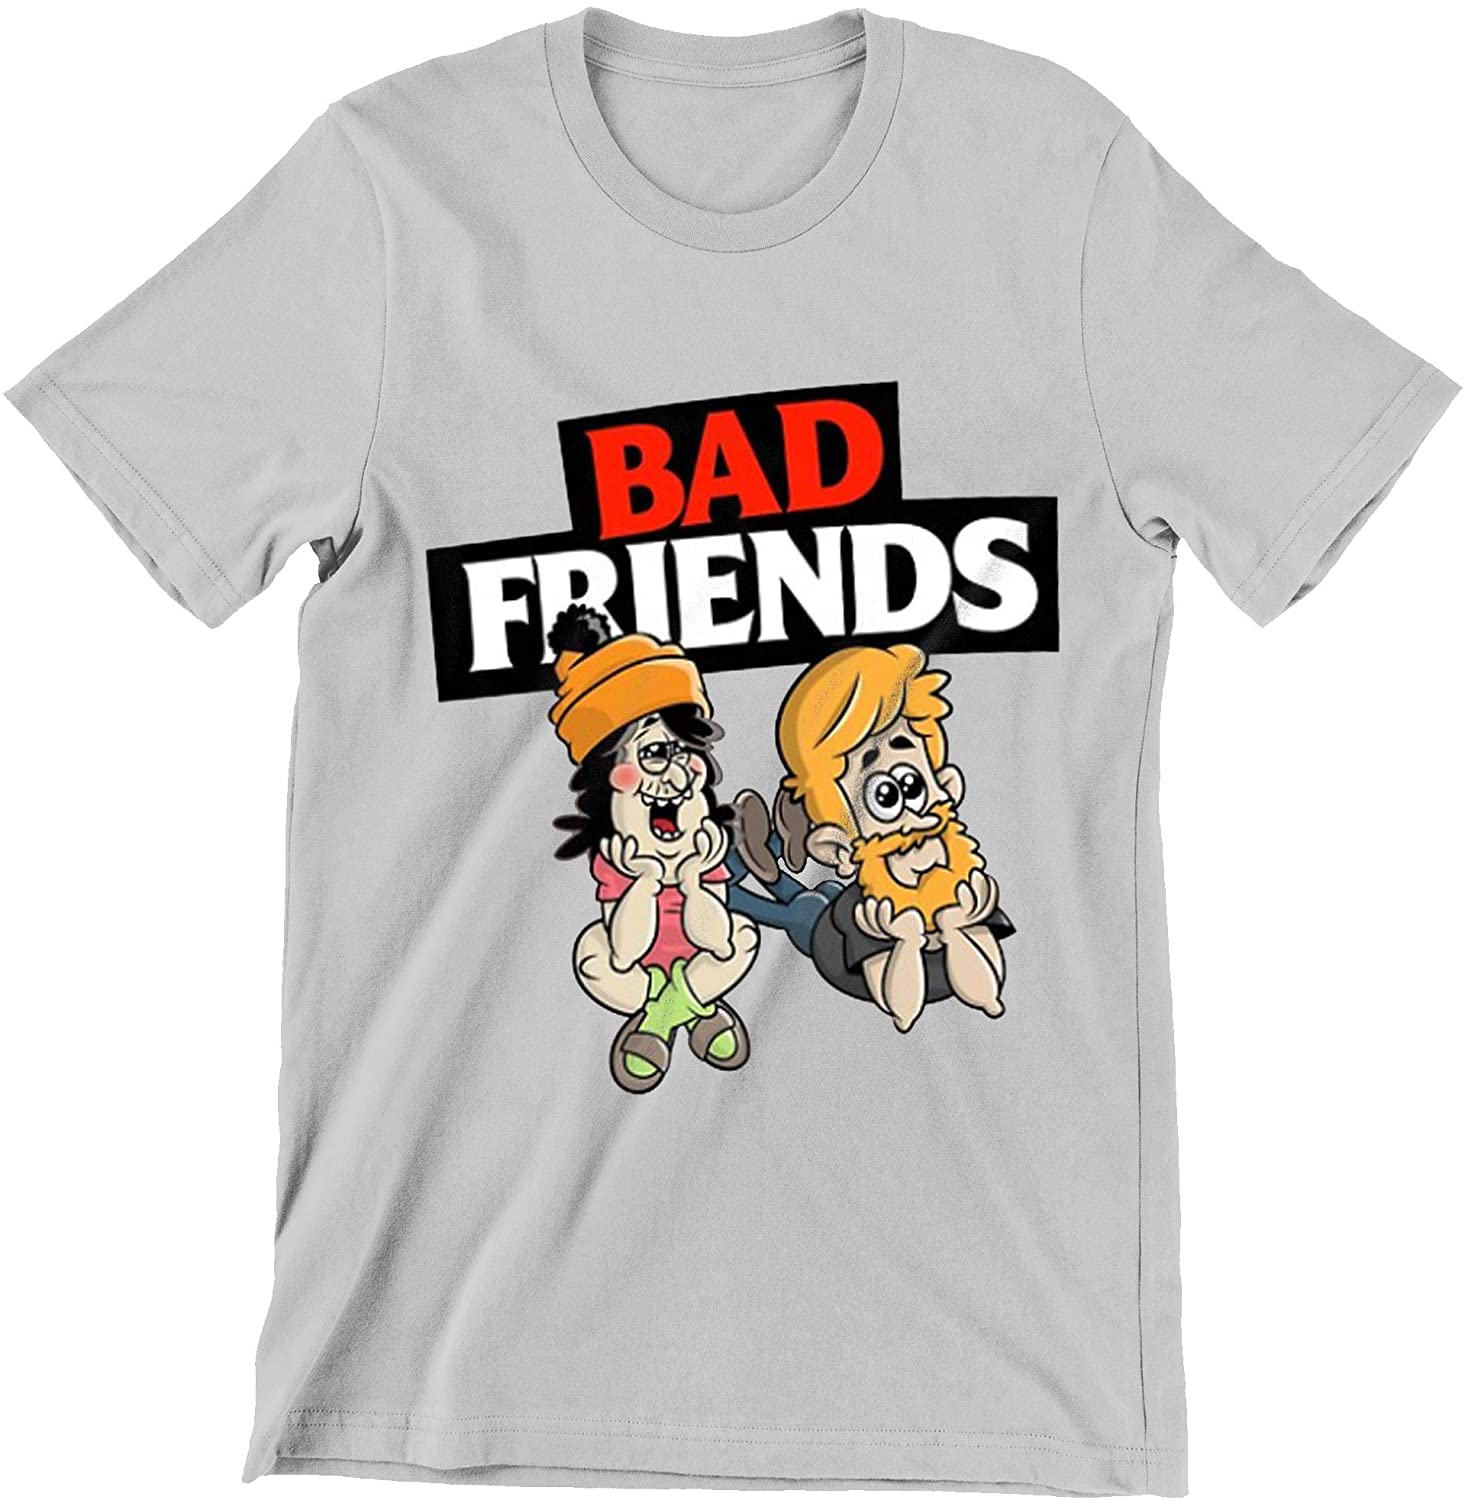 Swag Haven: Bad Friends’ Official Merchandise Paradise